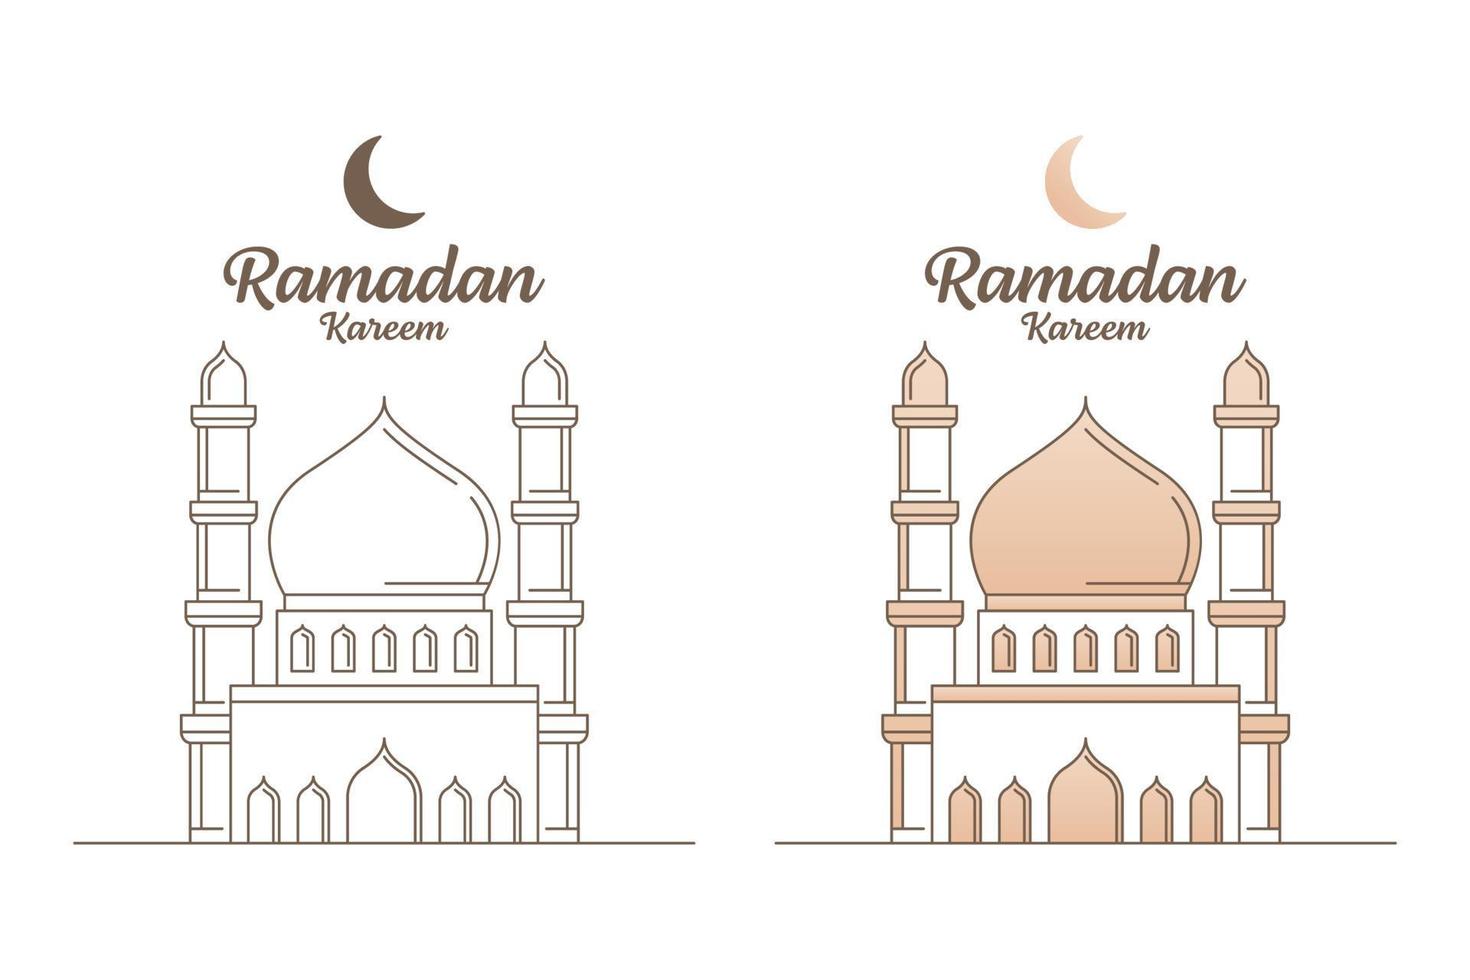 Ramadan kareem vector design illustration monoline or line art style